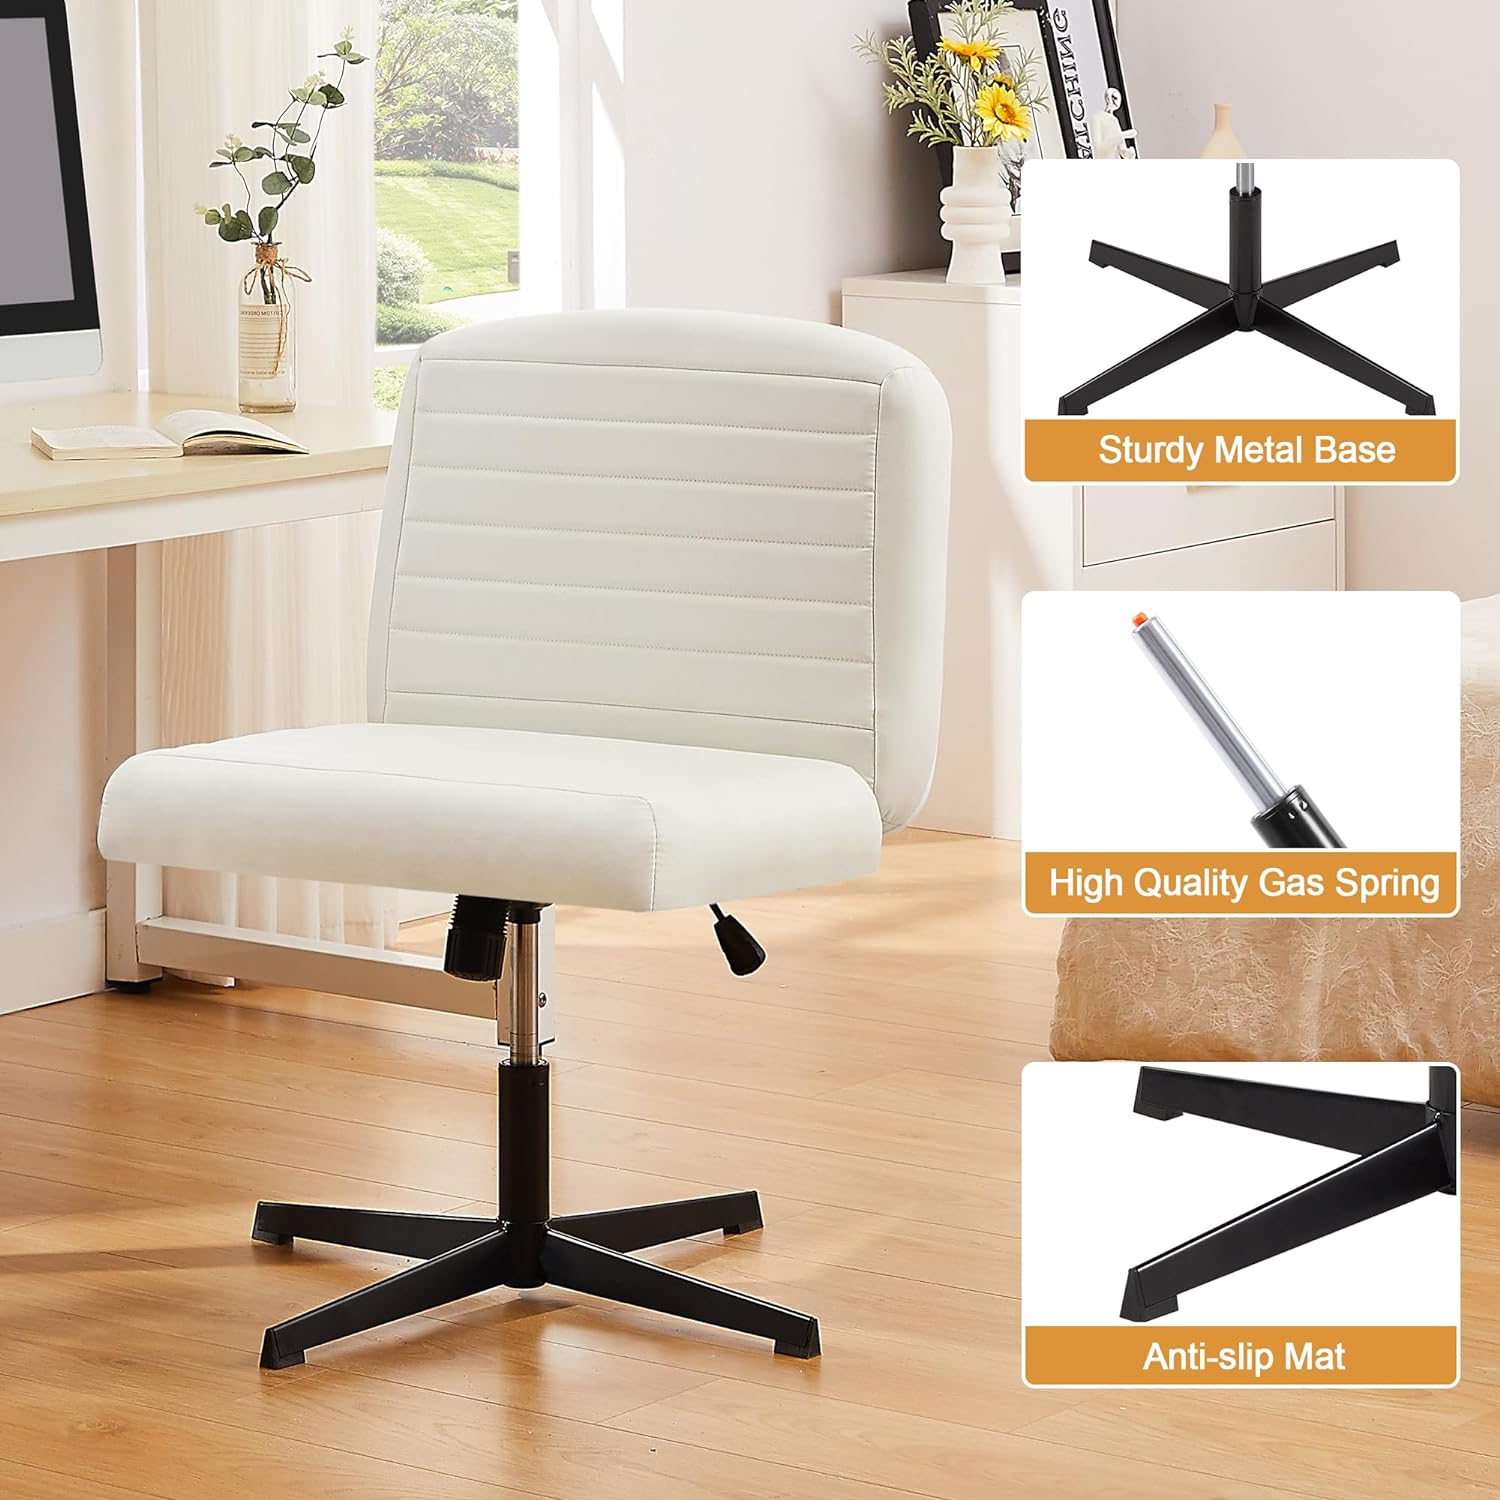 VECELO Armless Office Chair No Wheels Fabric Padded Cross Legged